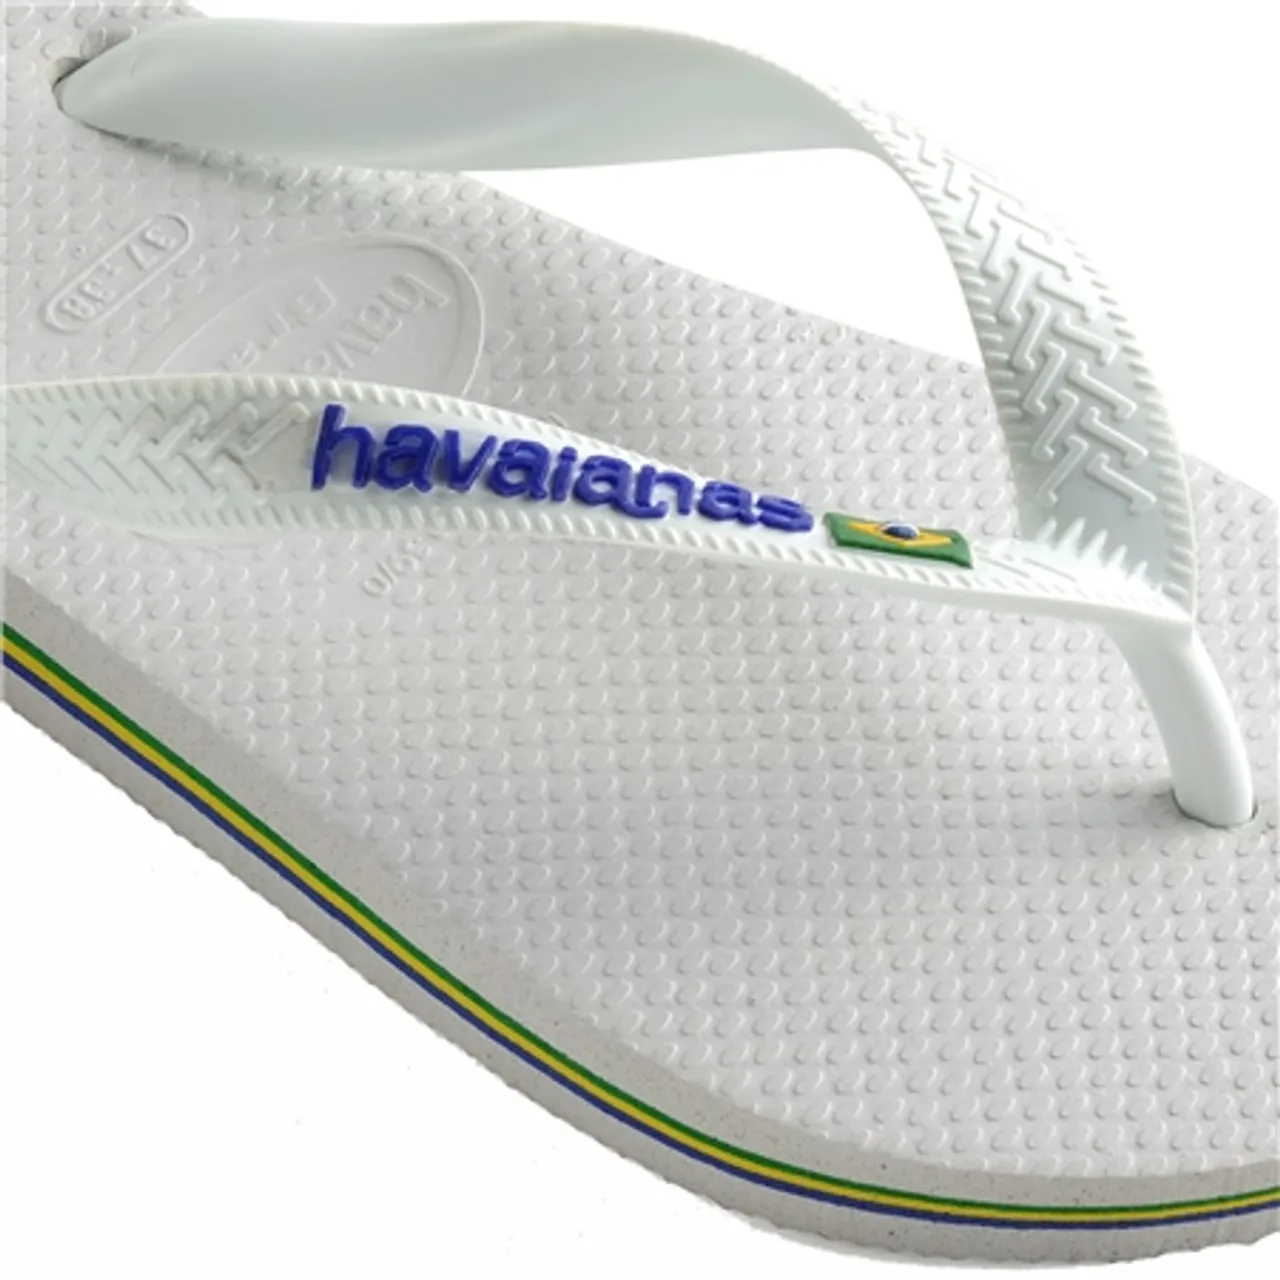 Havaianas Brazil Logo Flip Flops - White - UK 6-7 (EU 39/40)